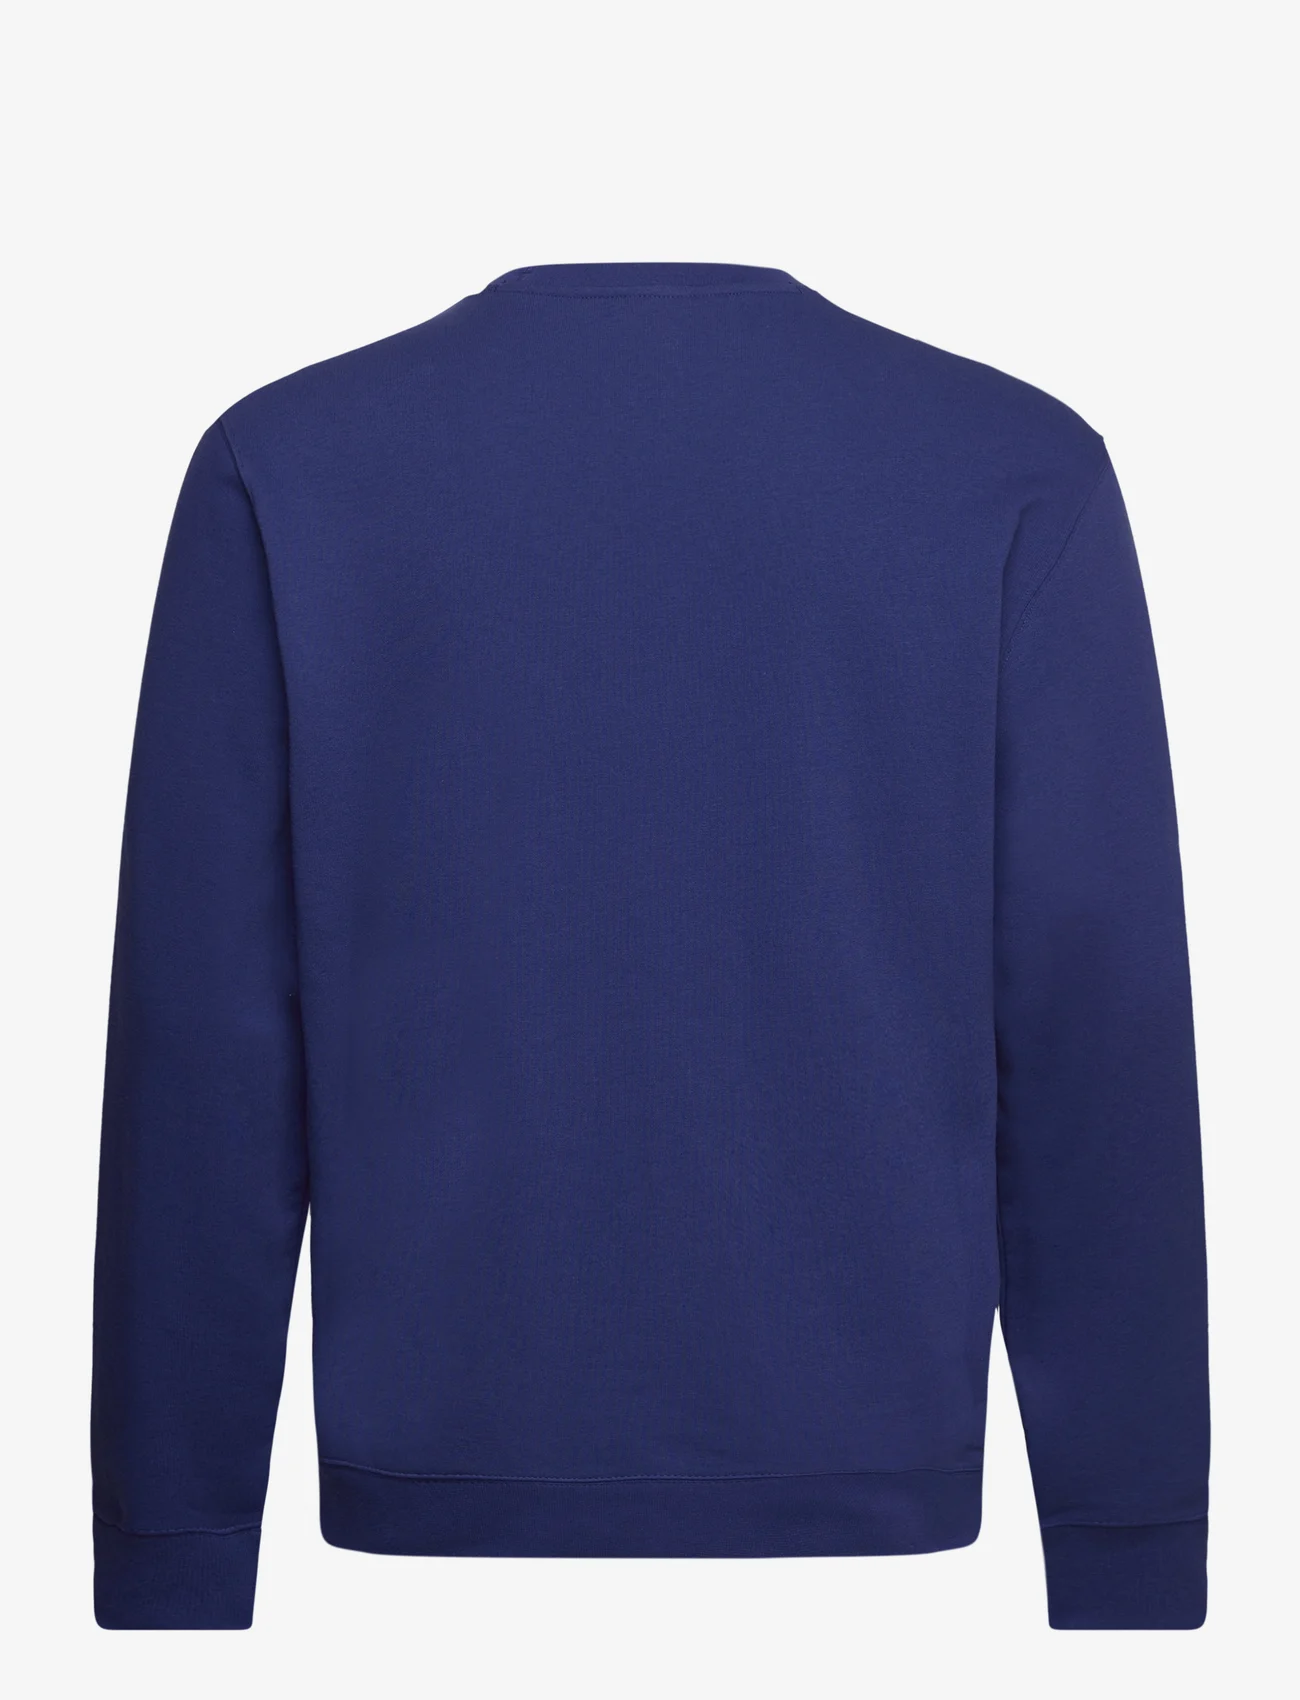 Champion - Crewneck Sweatshirt - hupparit - bellwether blue - 1